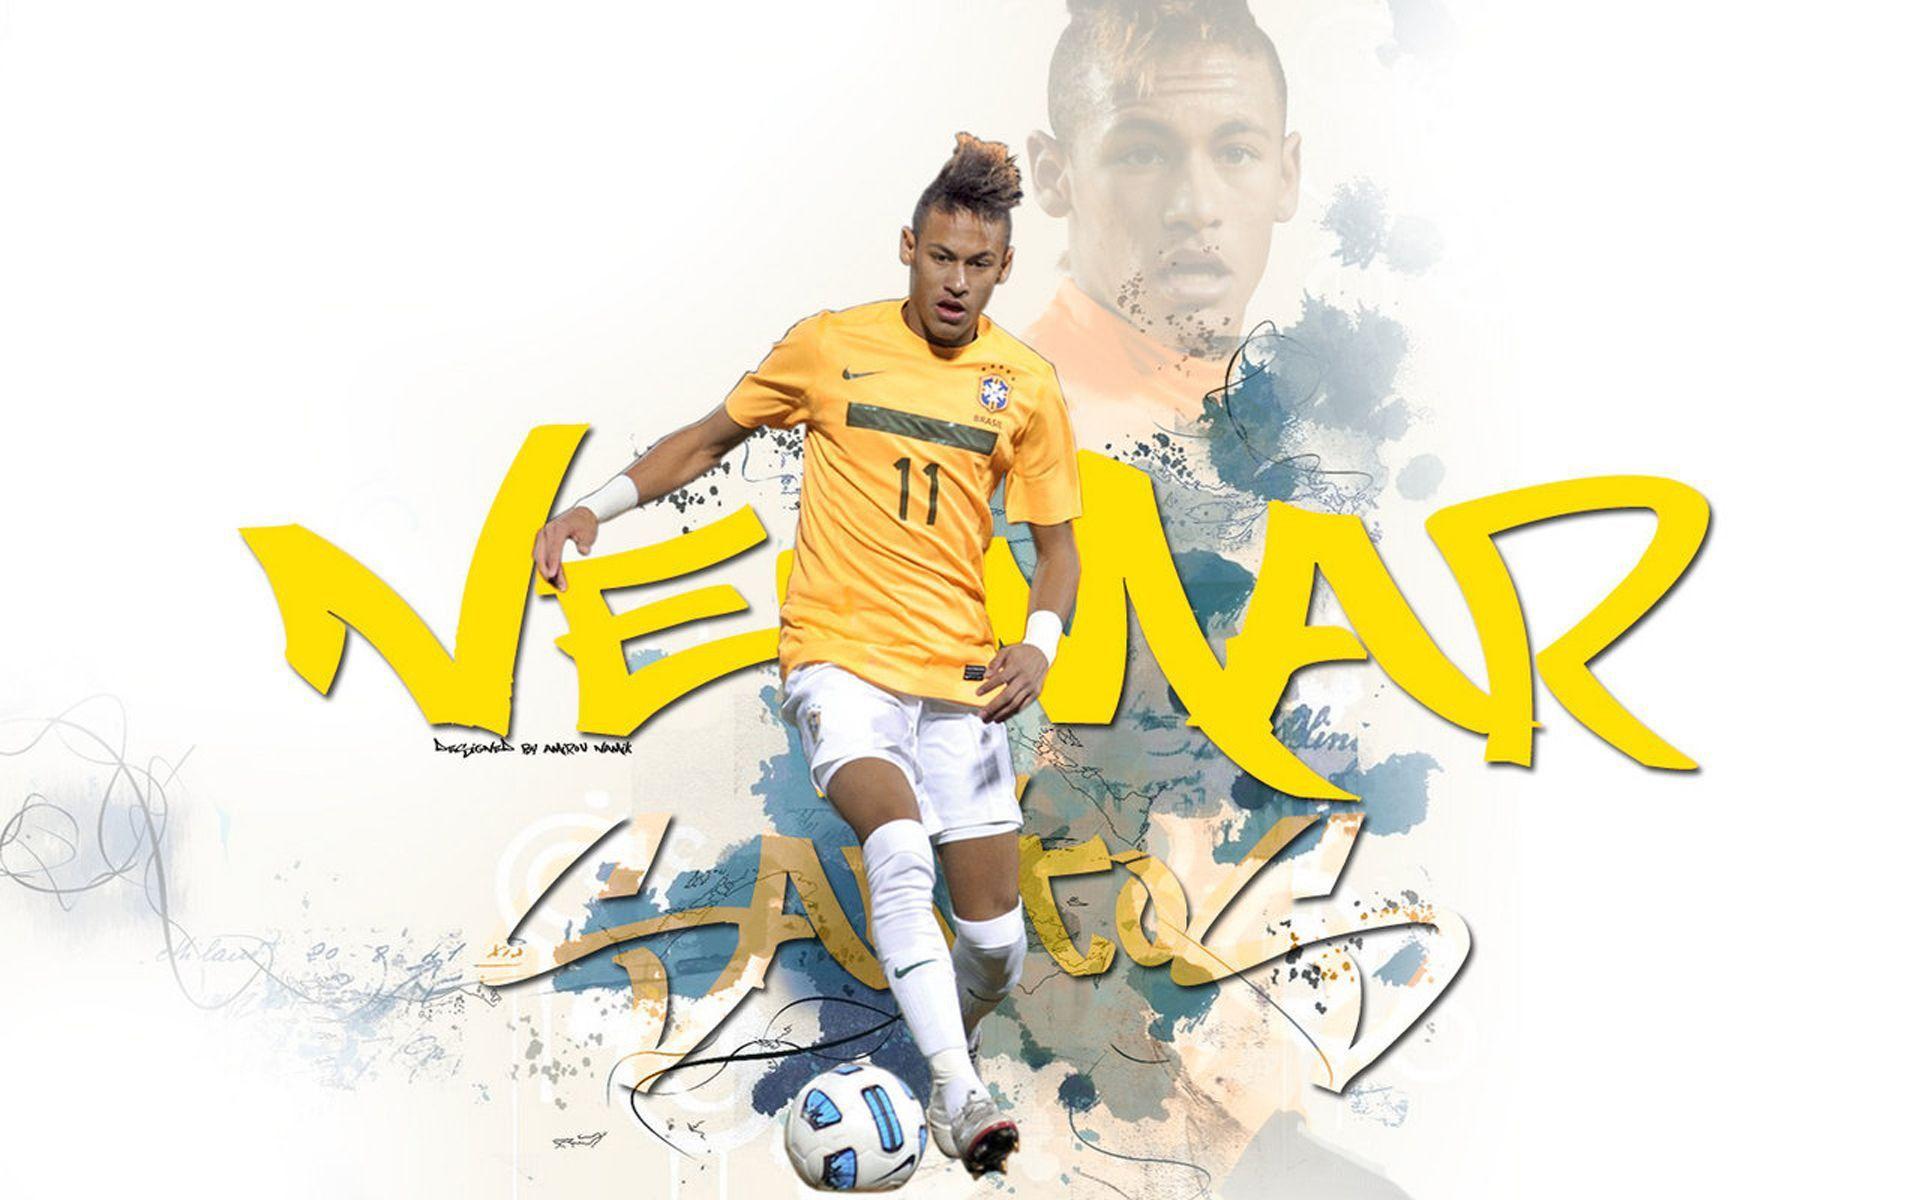 Neymar Grafite 2013 Wallpapers Wide or HD